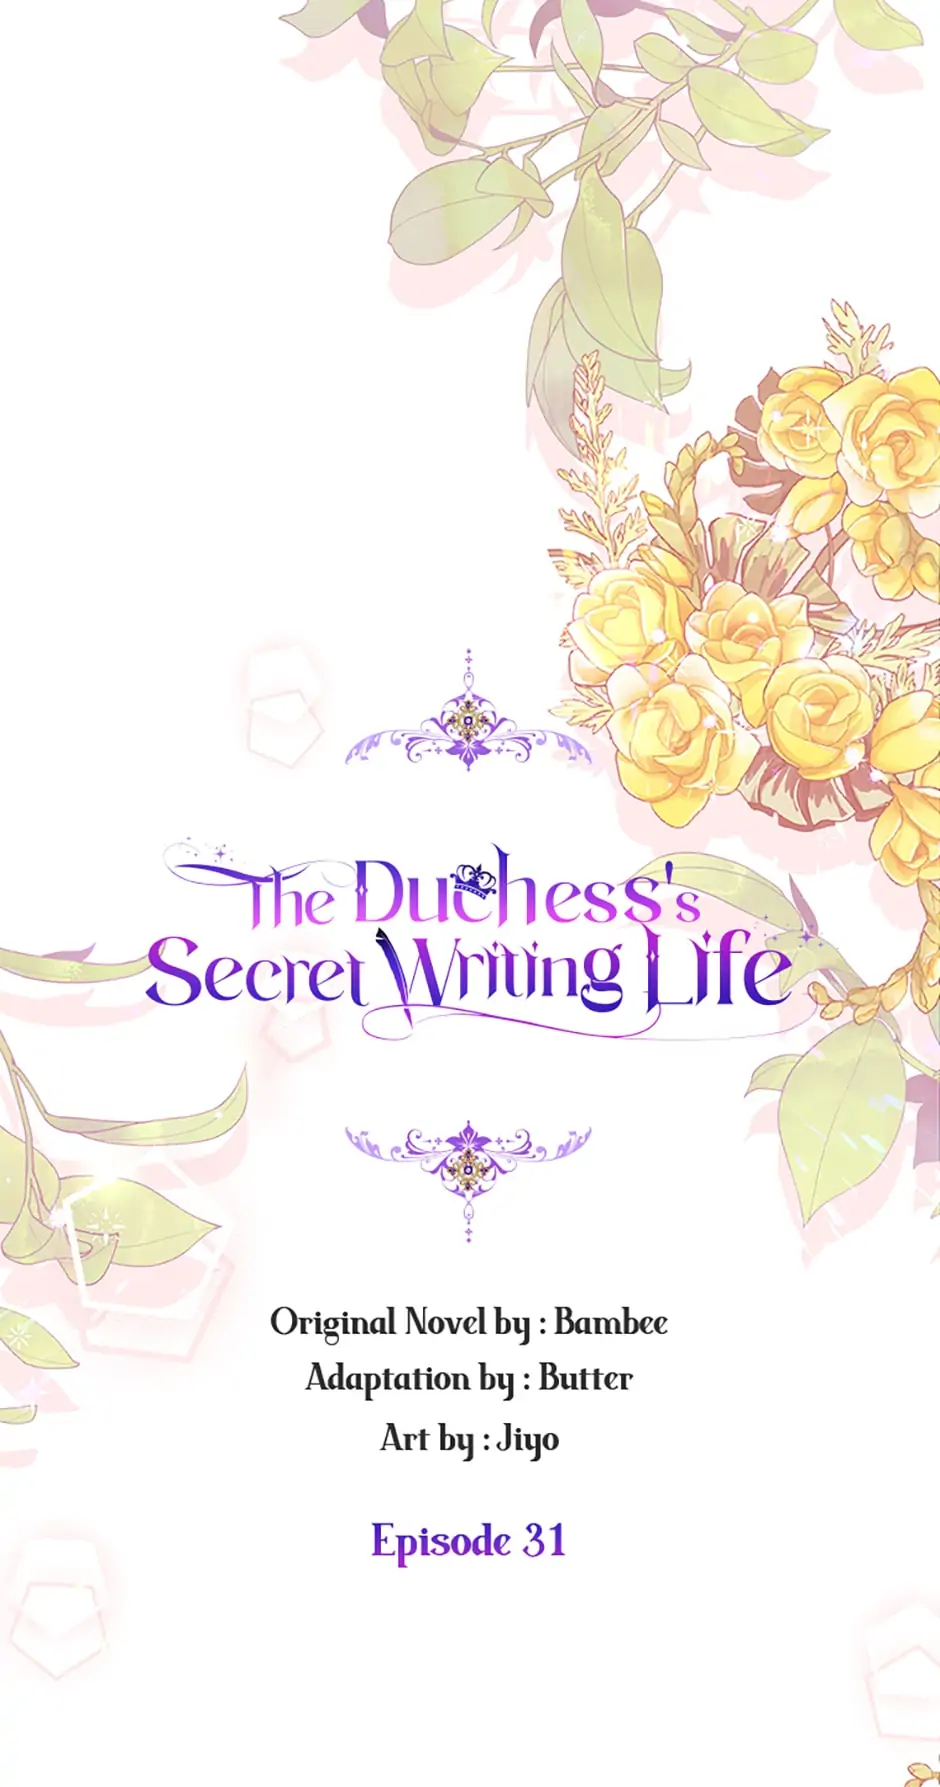 The Duchess’ Secret Writings chapter 31